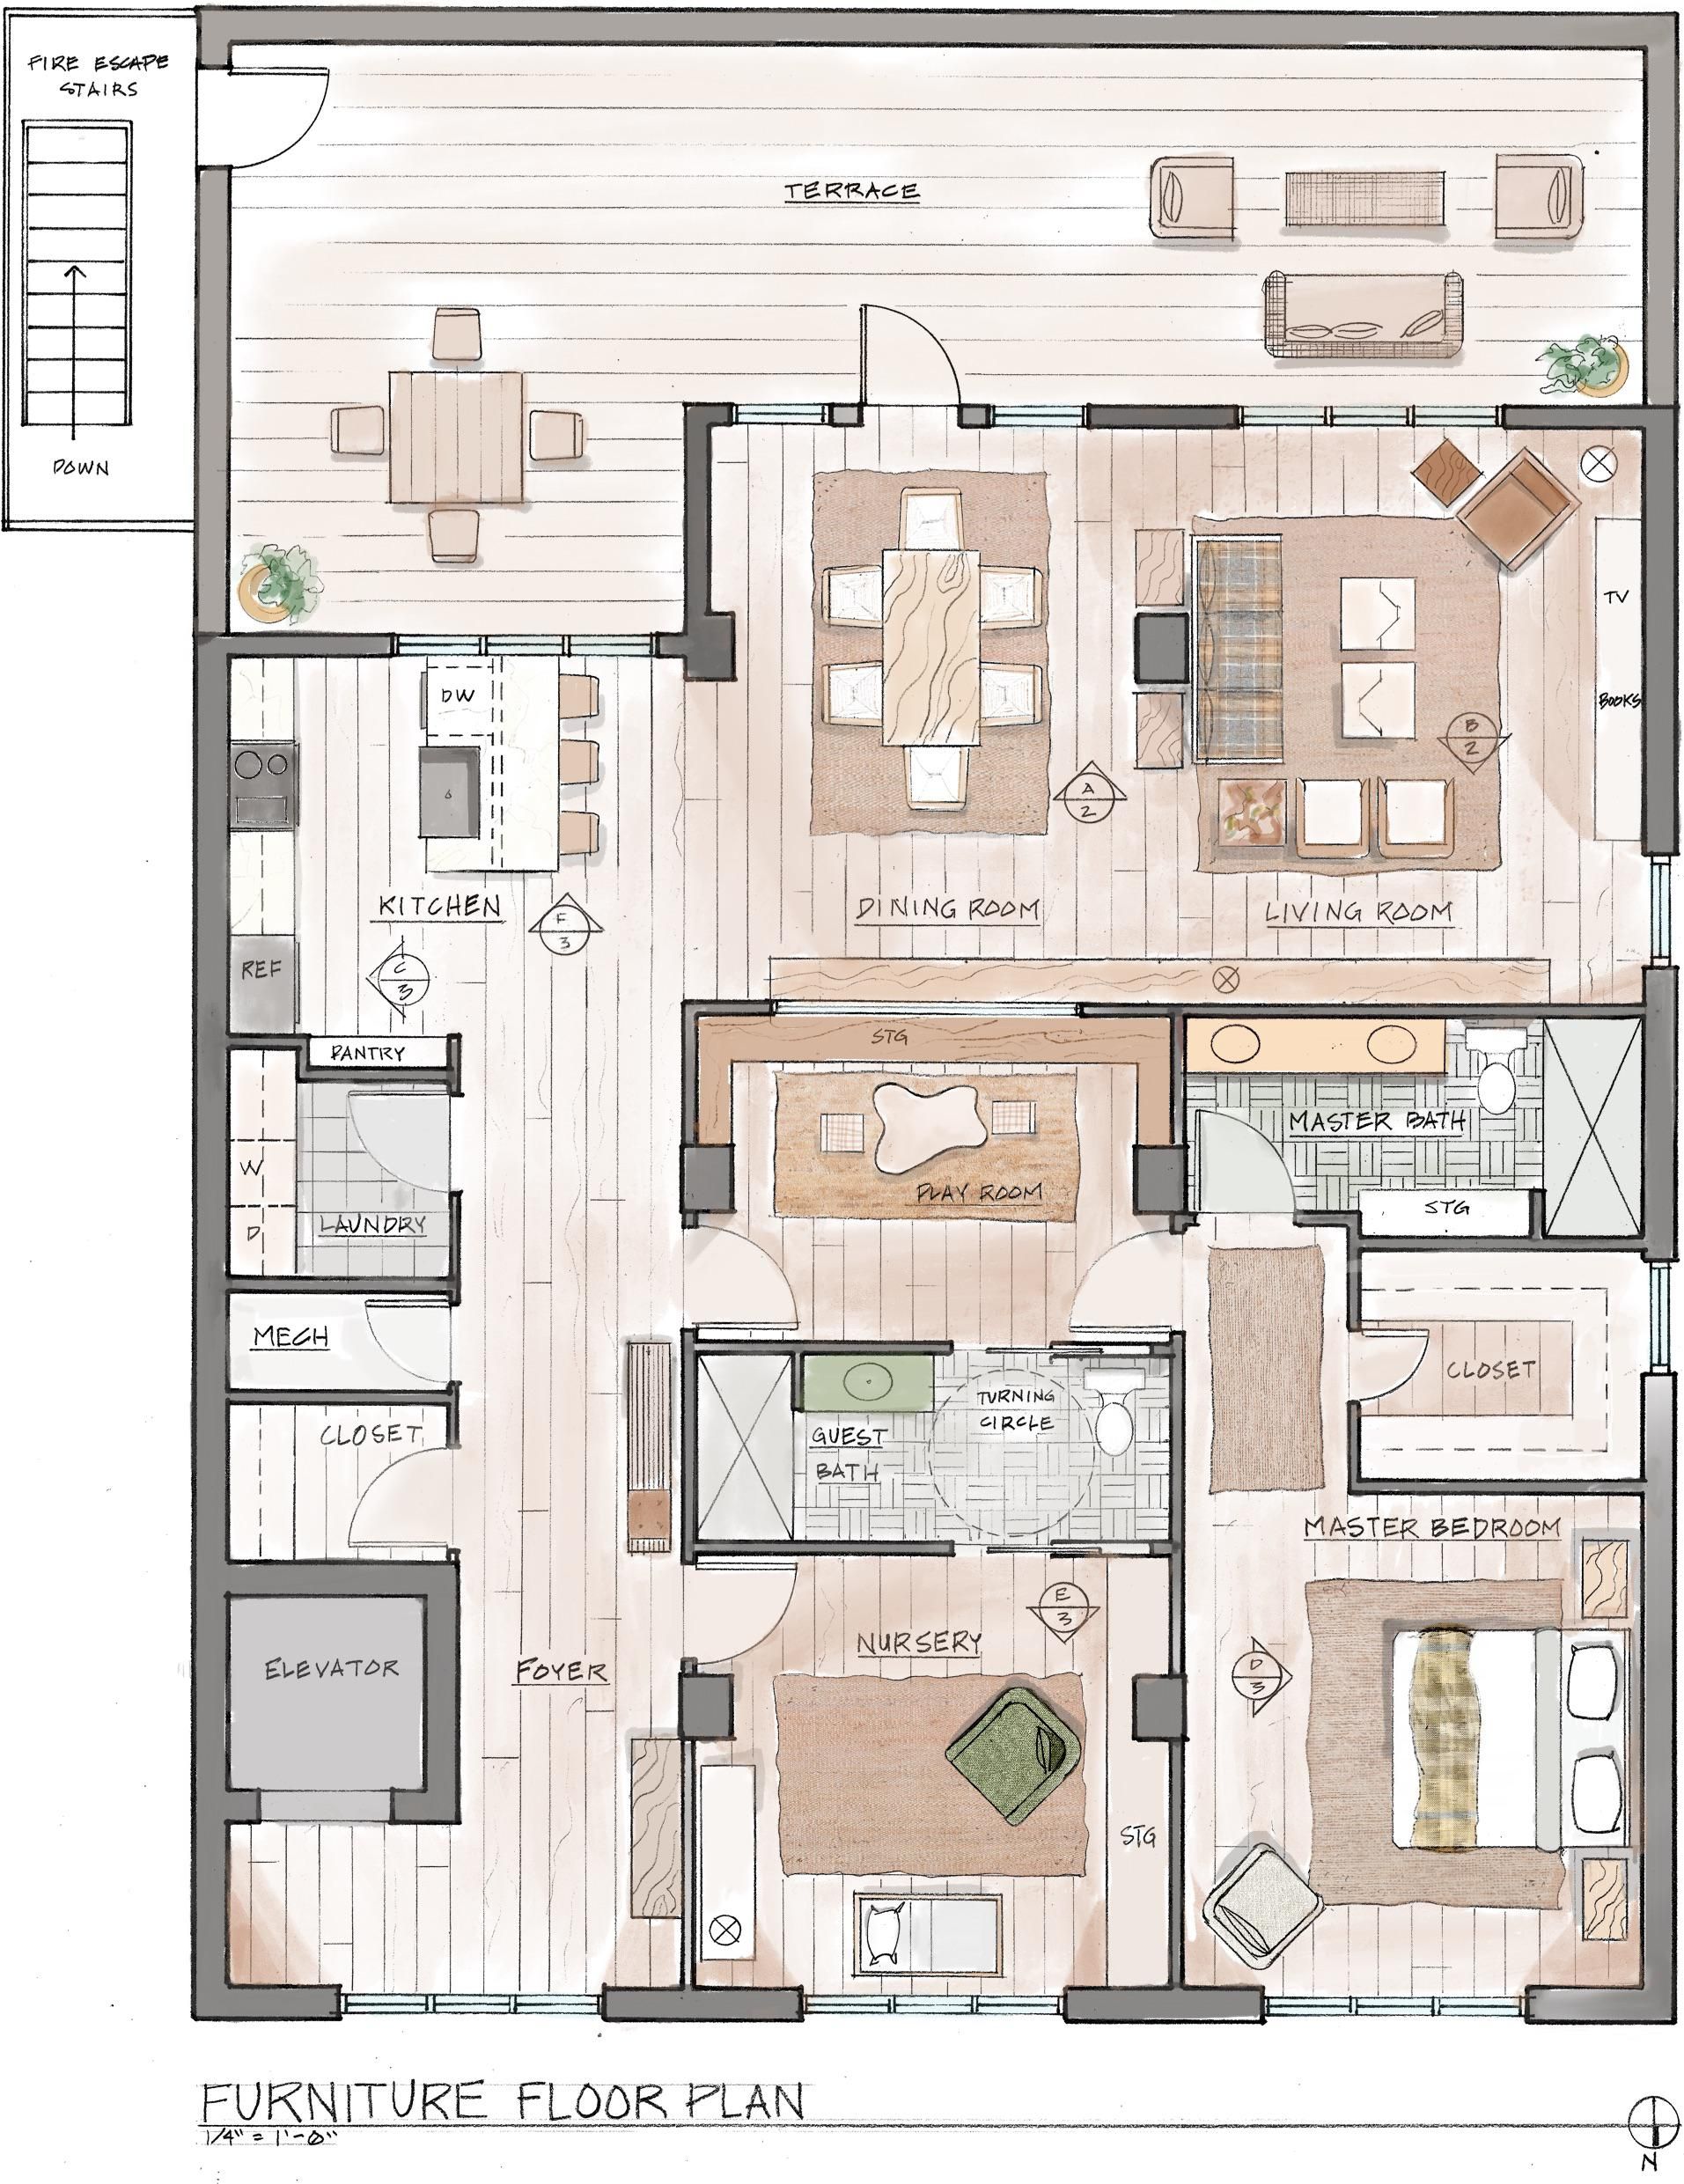 Furniture floor plan hand draft and render https//i.redd